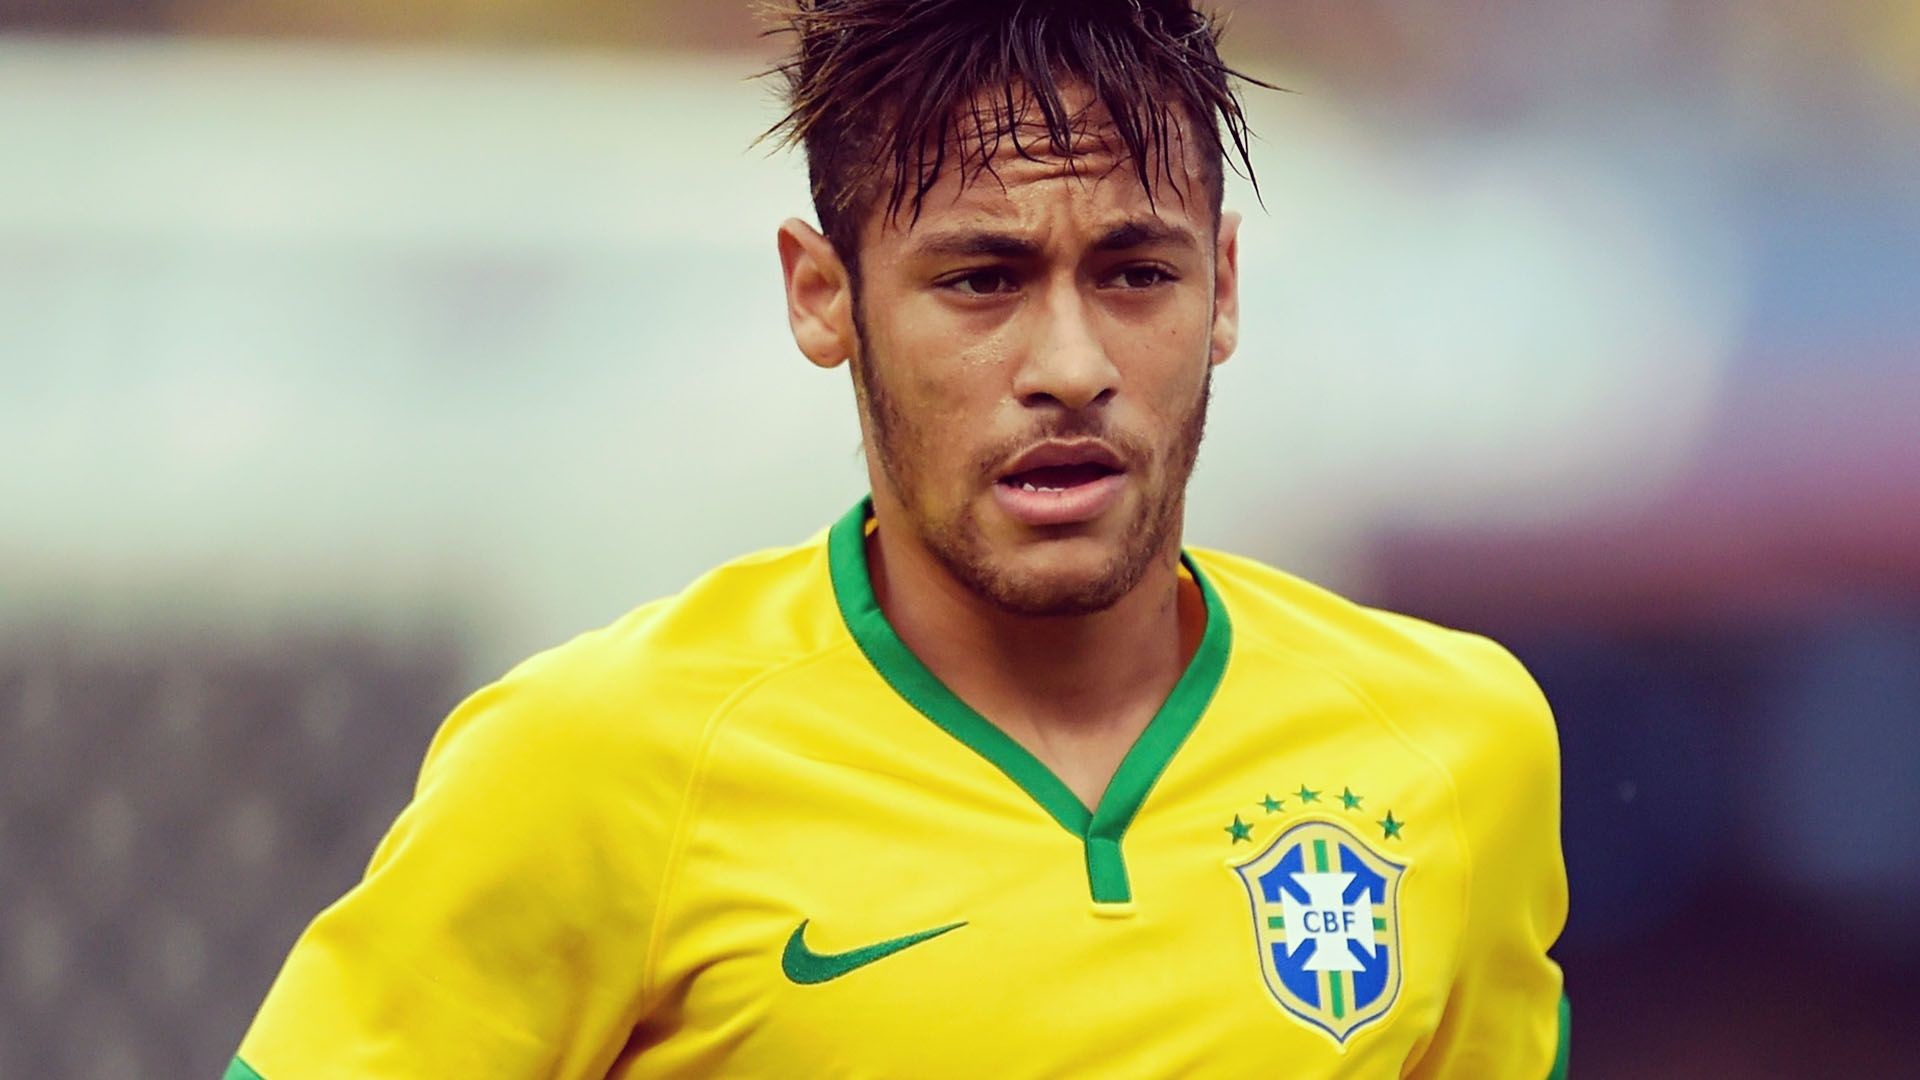 1920x1080 Neymar Wallpapers HD Images Download.